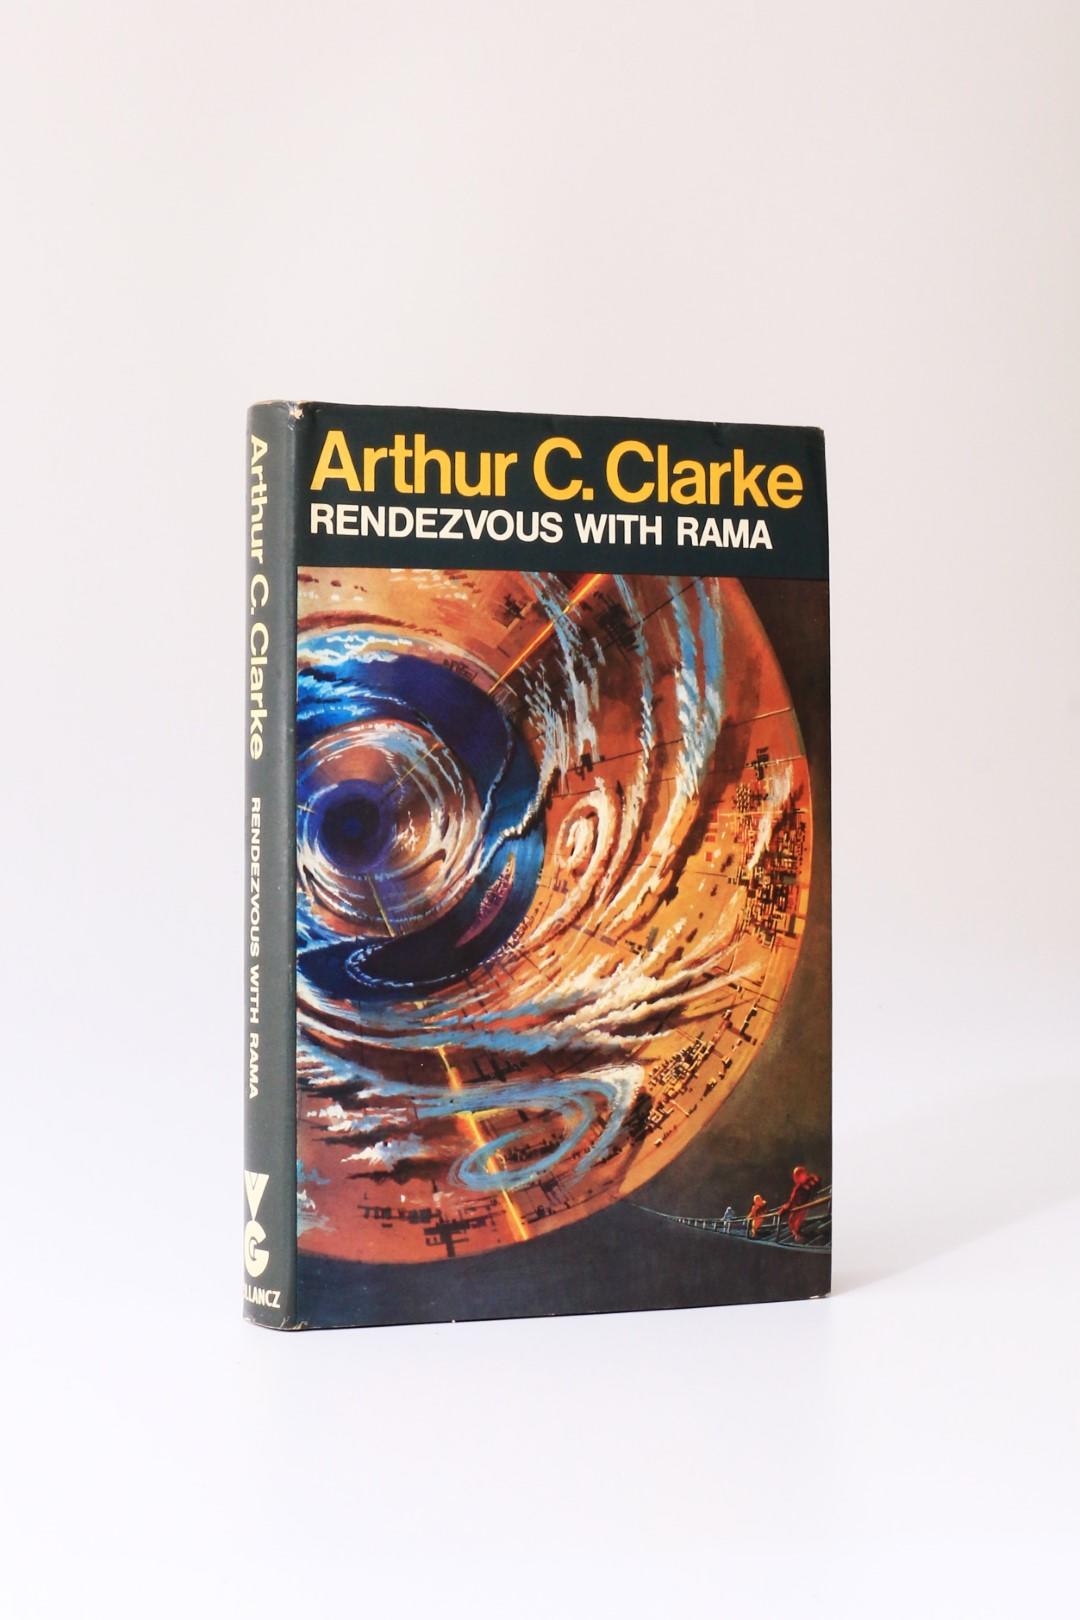 Arthur C. Clarke - Rendezvous with Rama - Gollancz, 1973, First Edition.